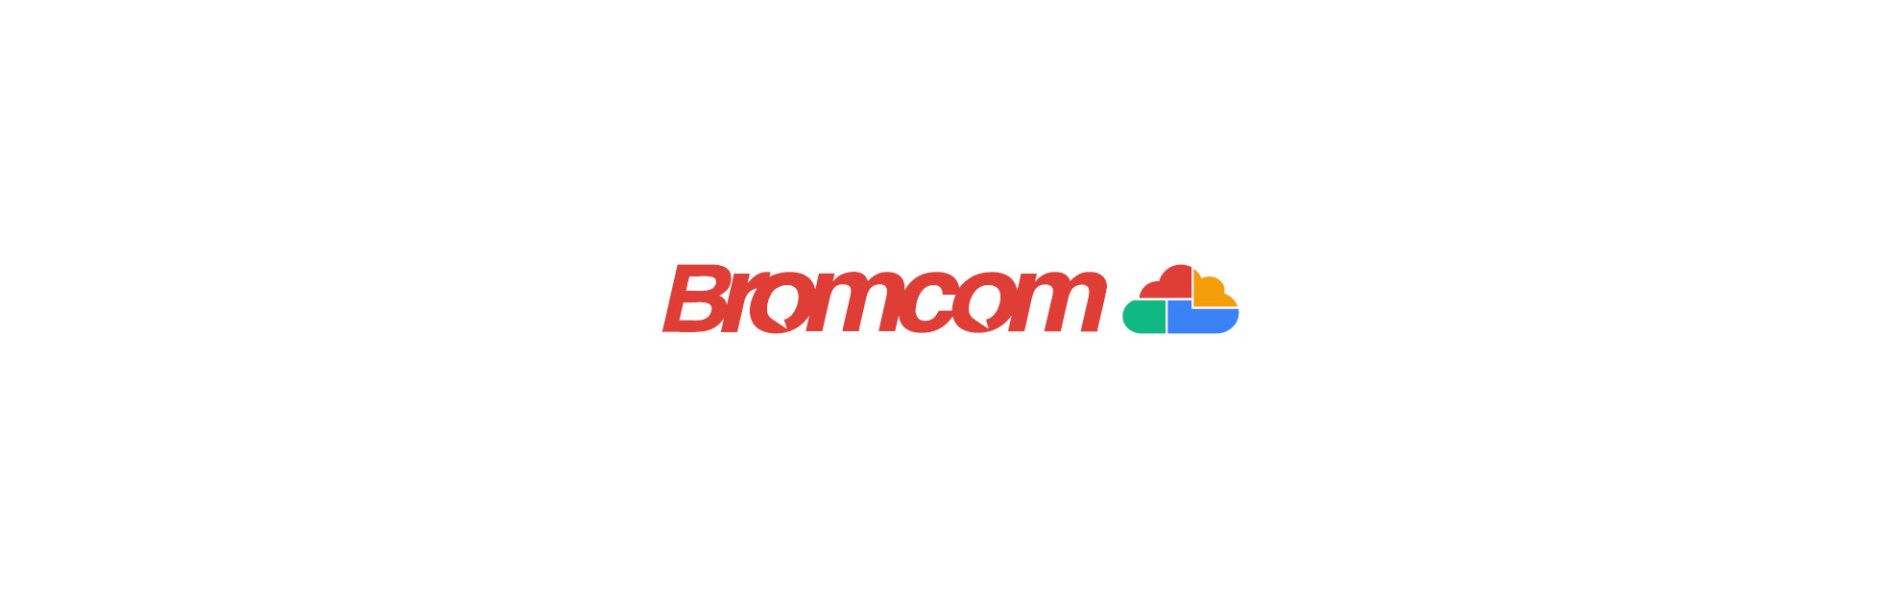 Bromcom logo